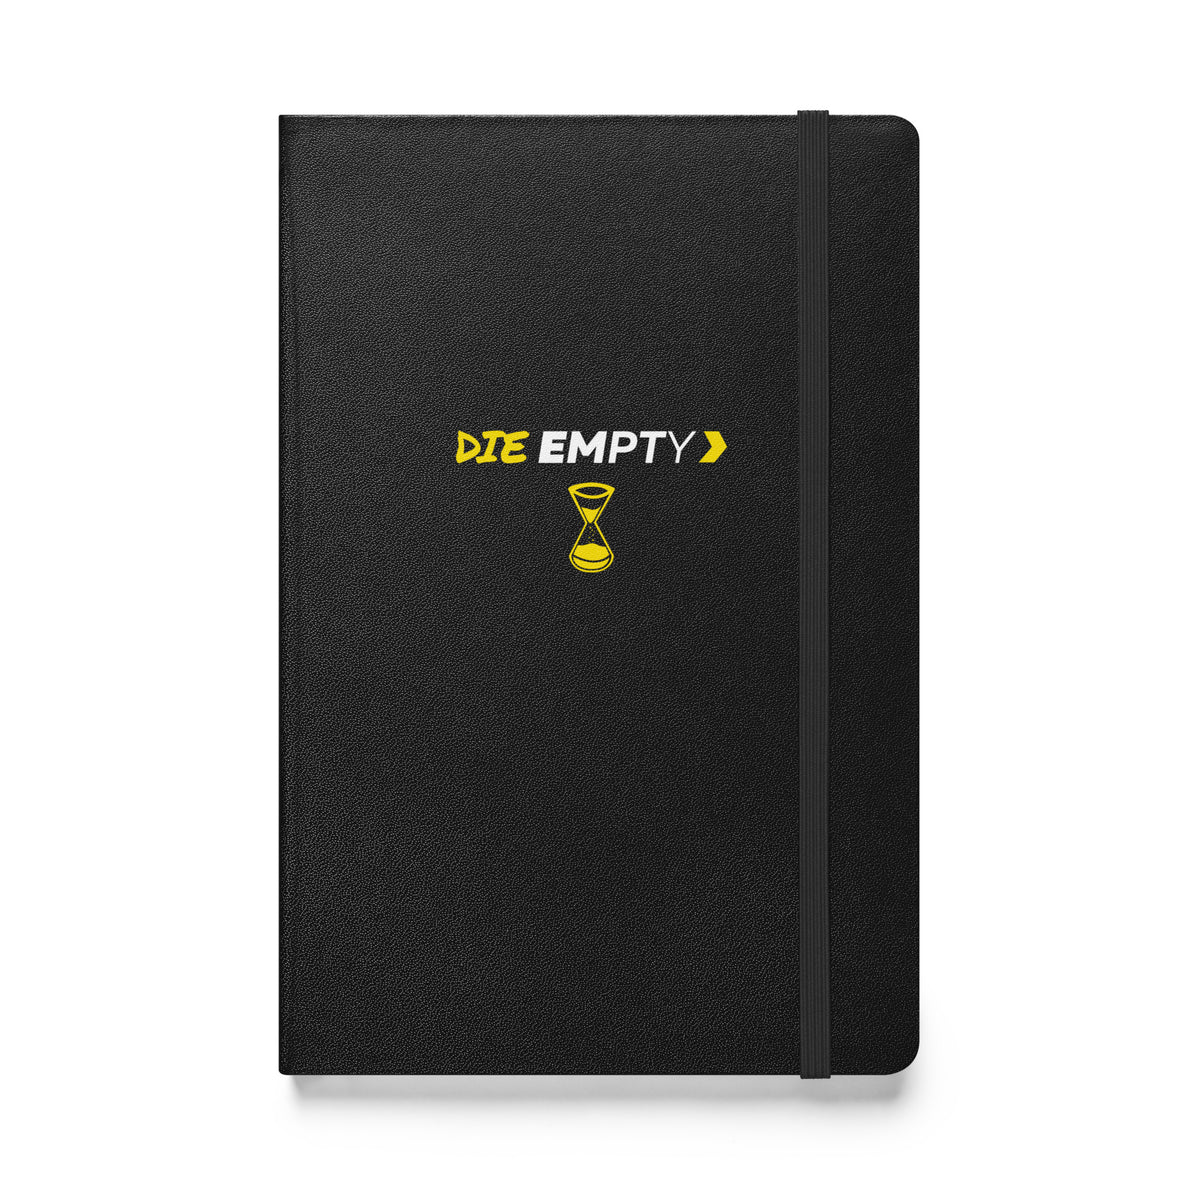 Die Empty Hardcover Notebook